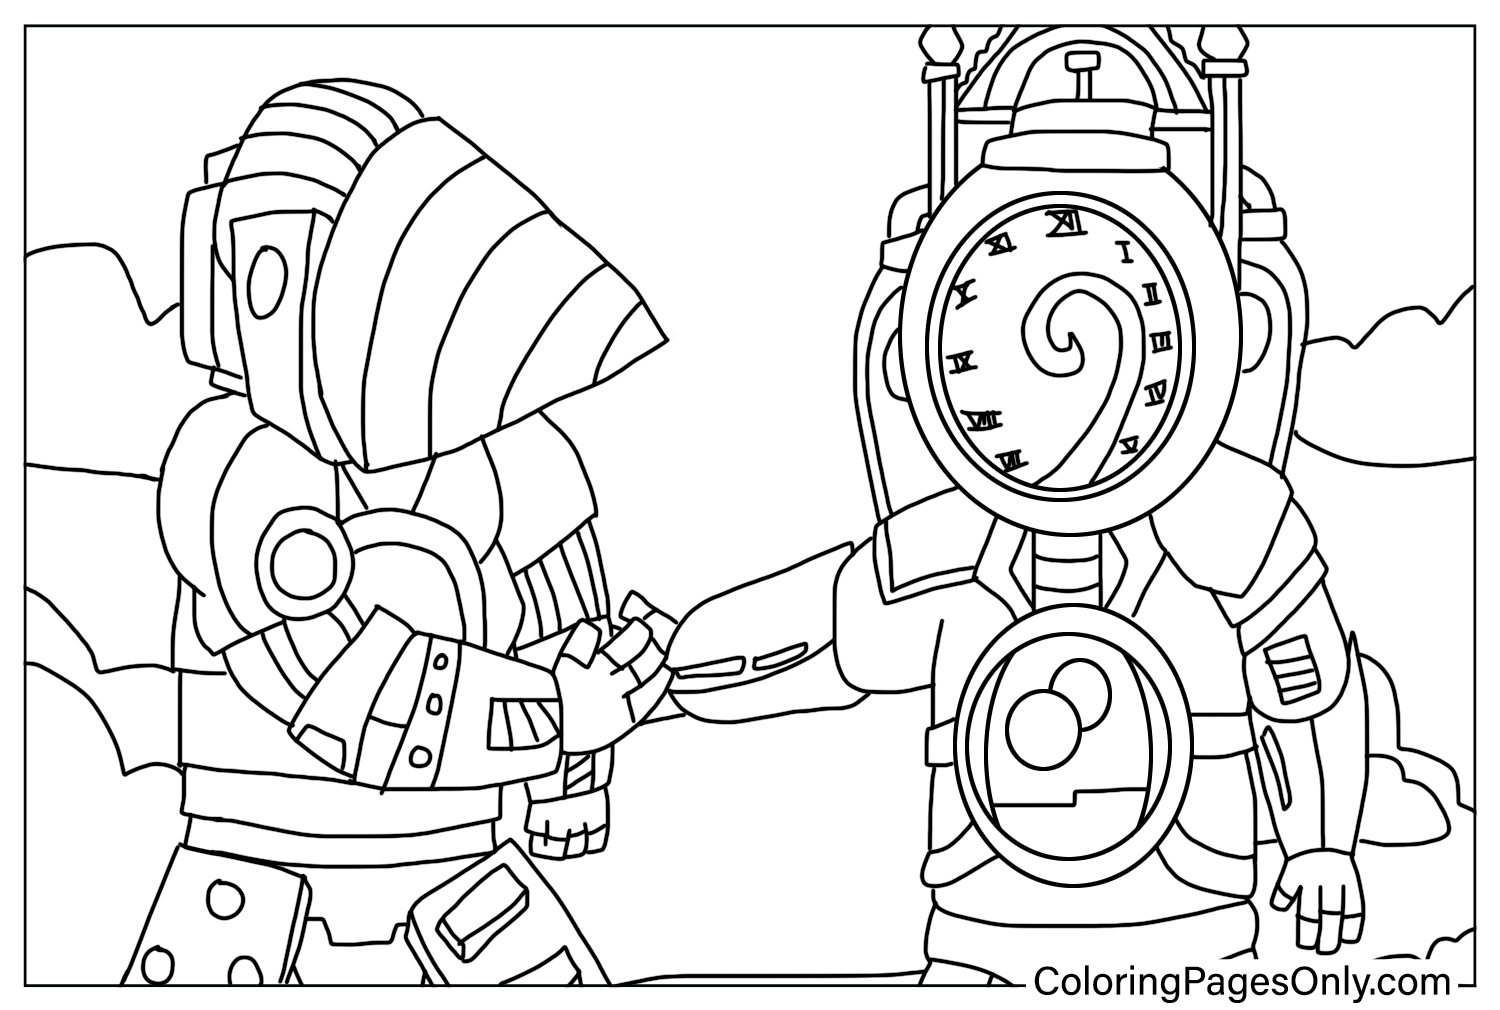 Titan ClockMan and Titan Drillman Coloring Pages from Titan Clock Man